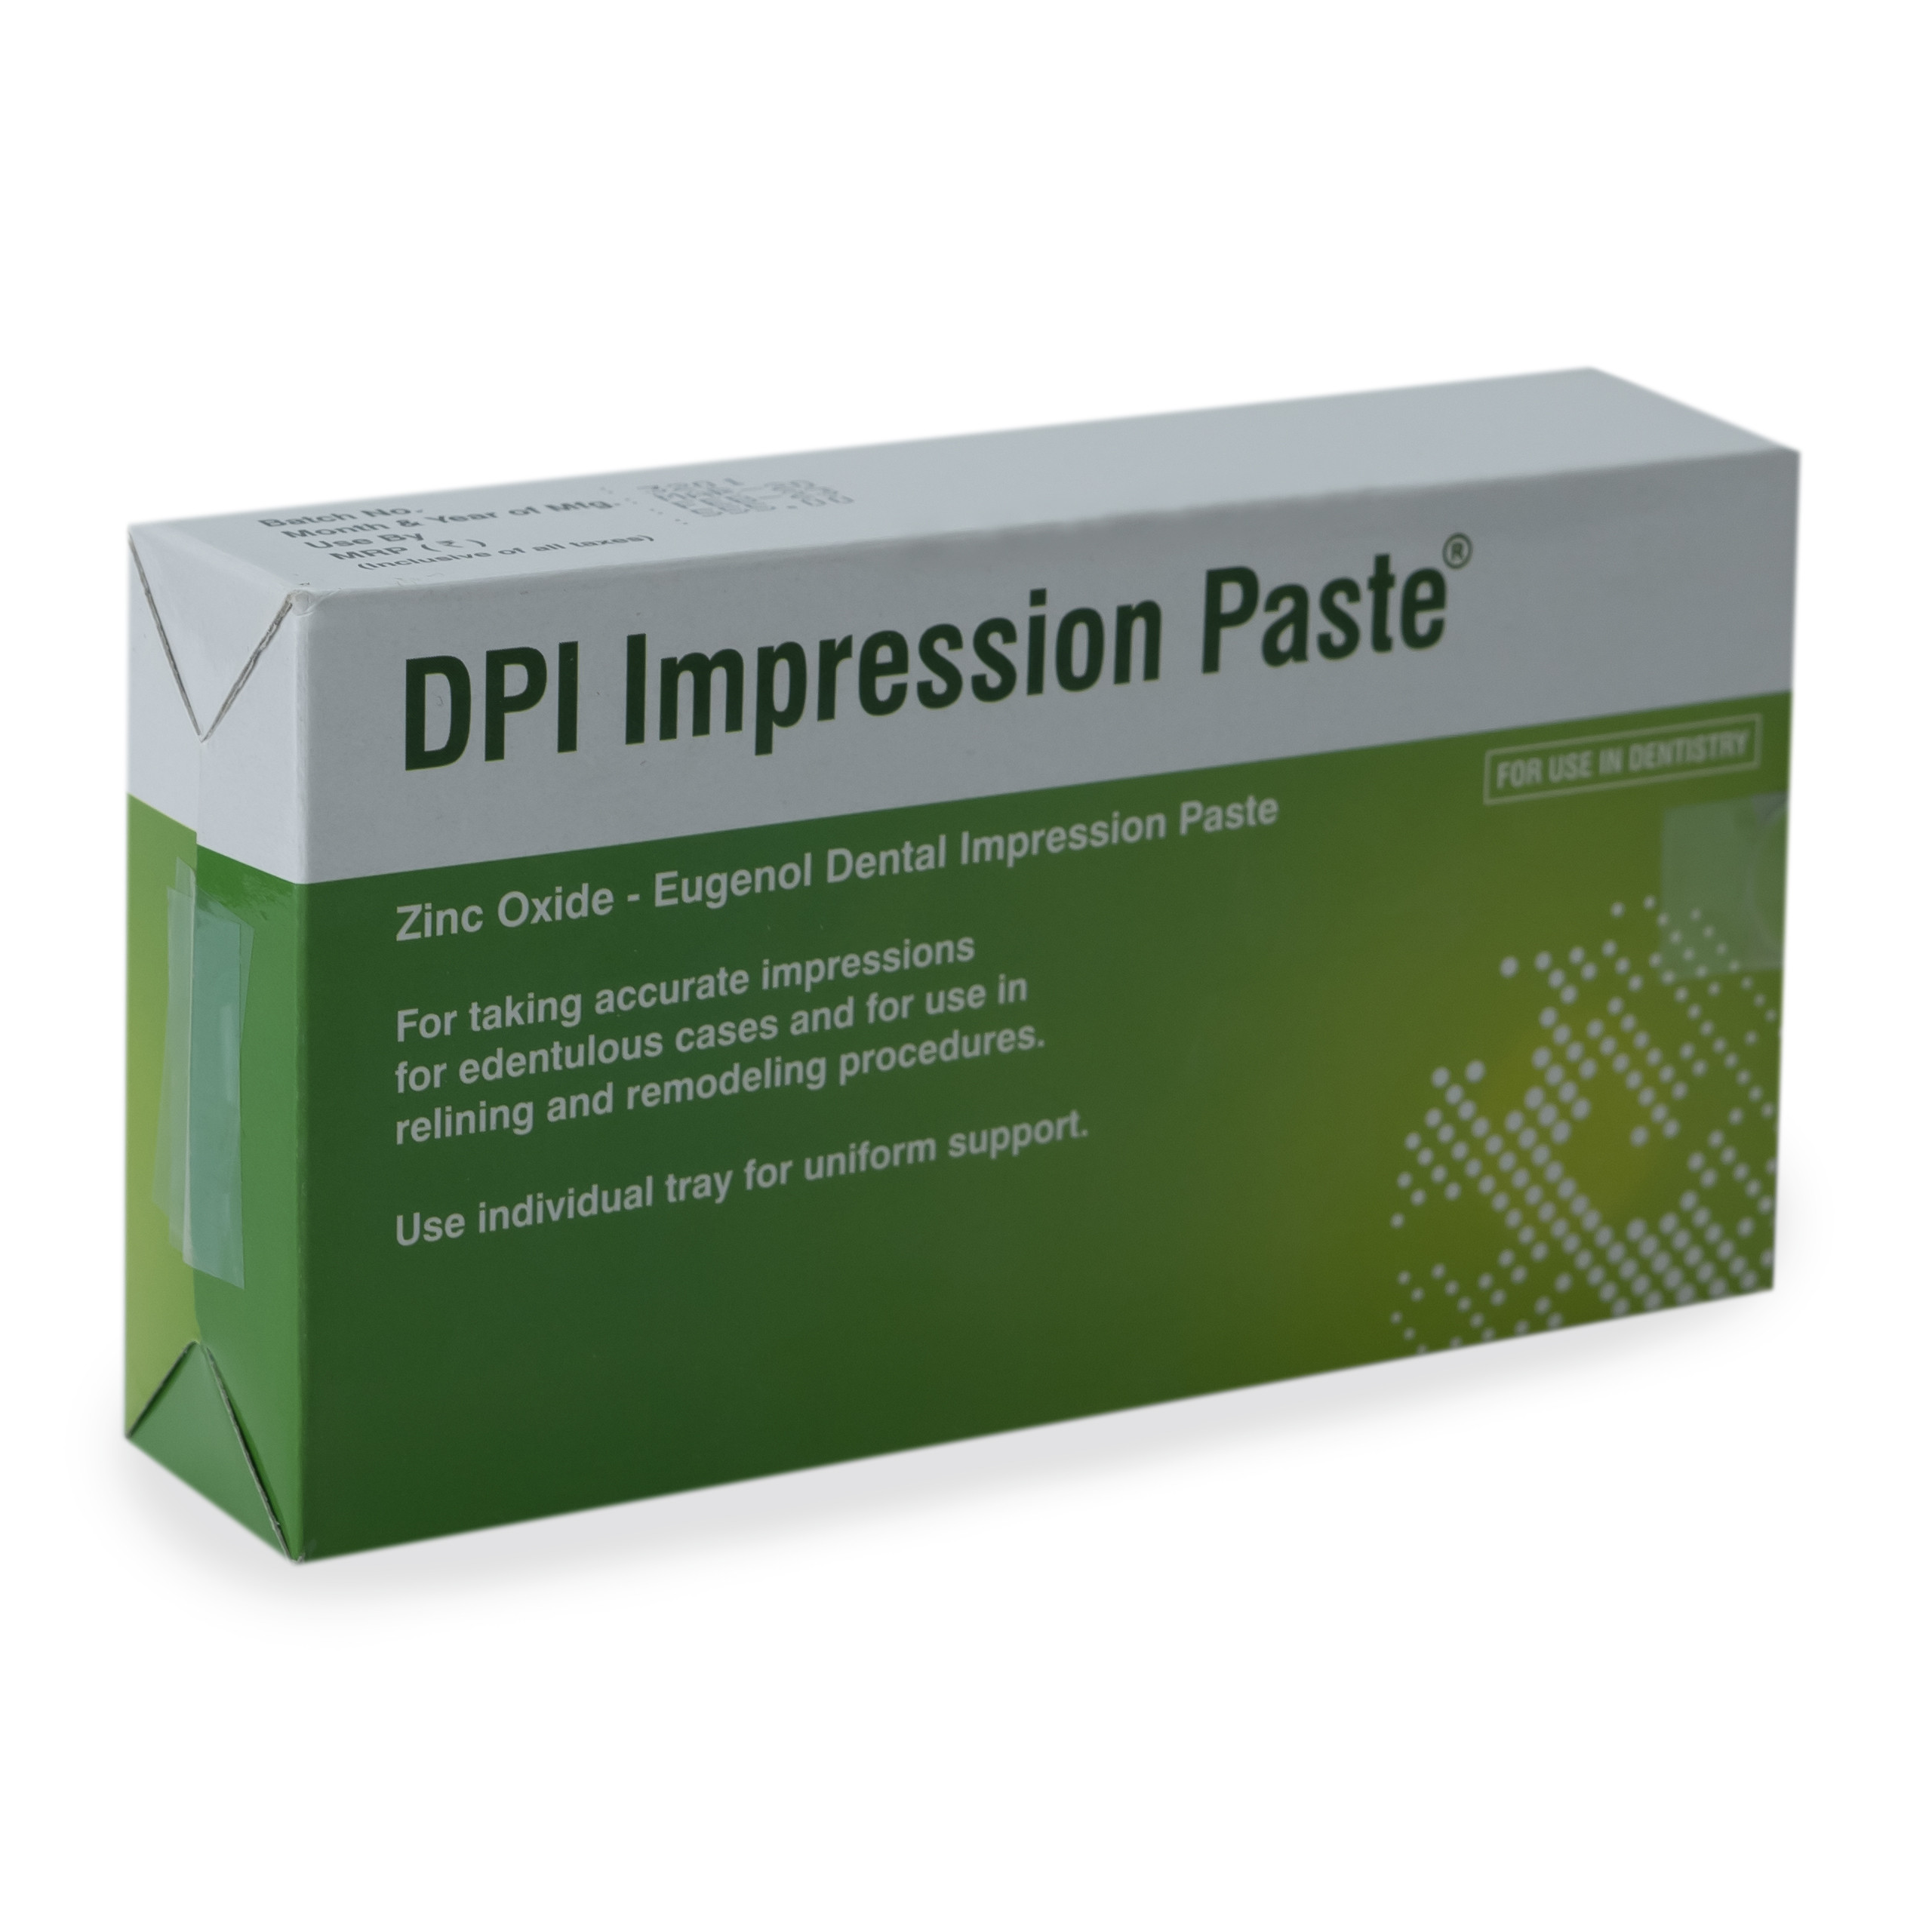 DPI Impression Paste